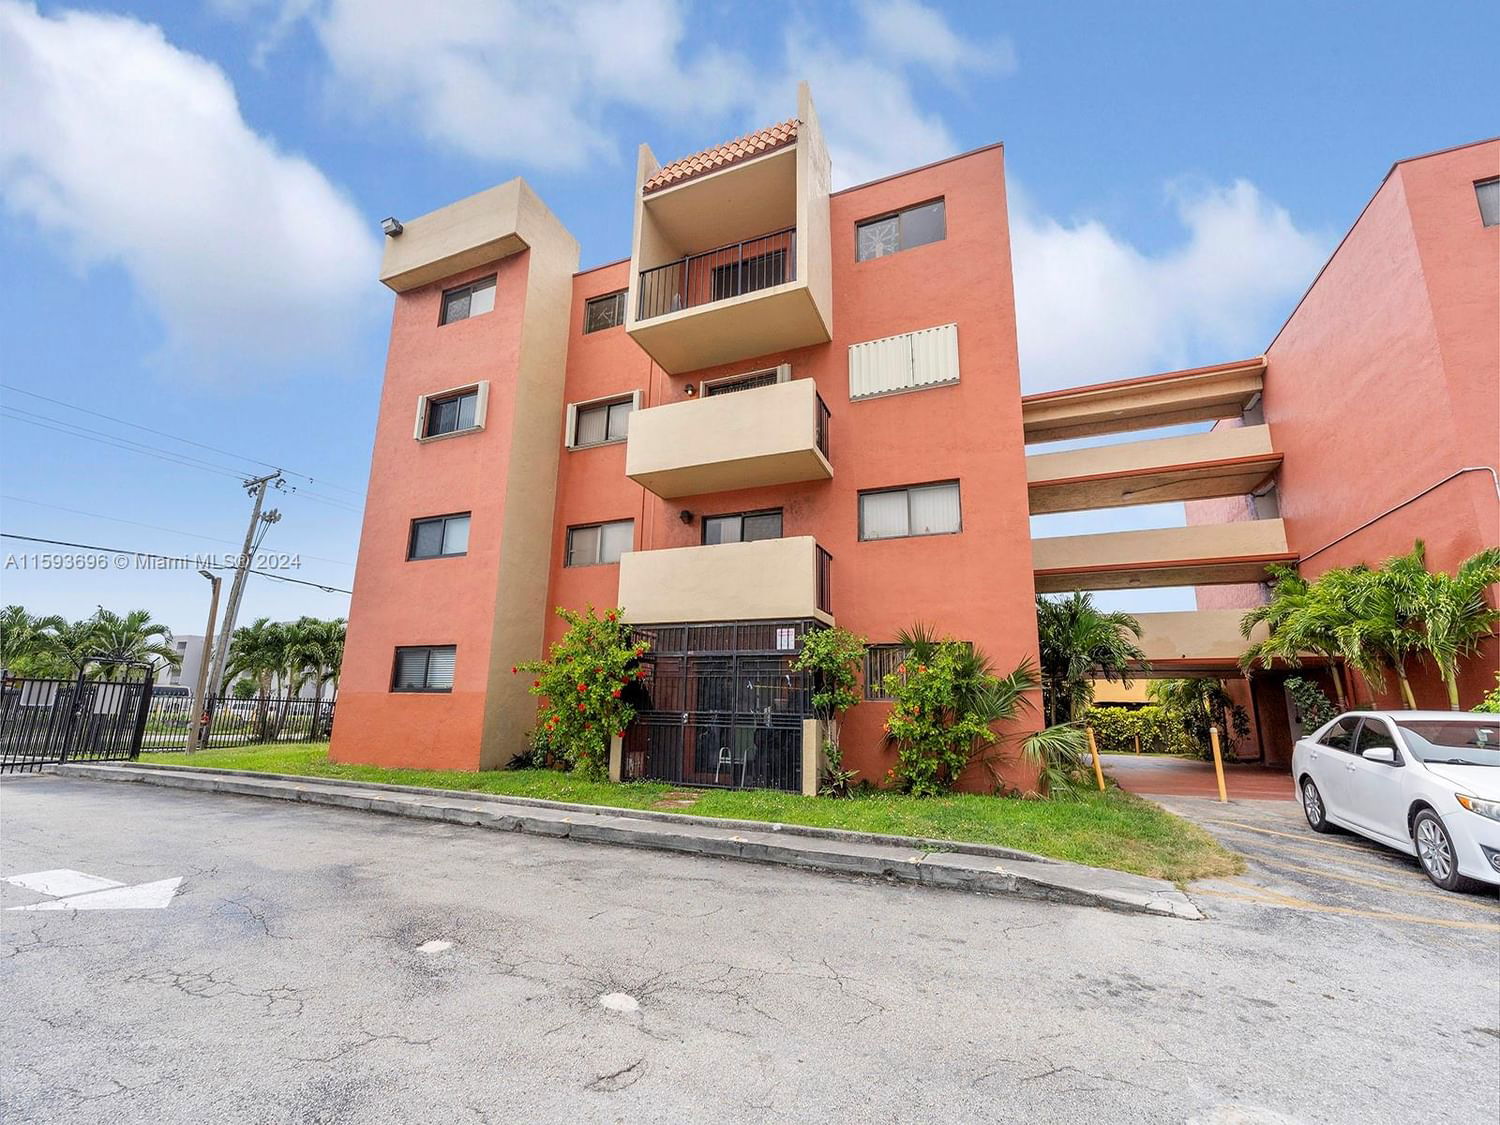 Real estate property located at 8095 8th St #103, Miami-Dade County, TOWERS NORTH CONDO, Miami, FL